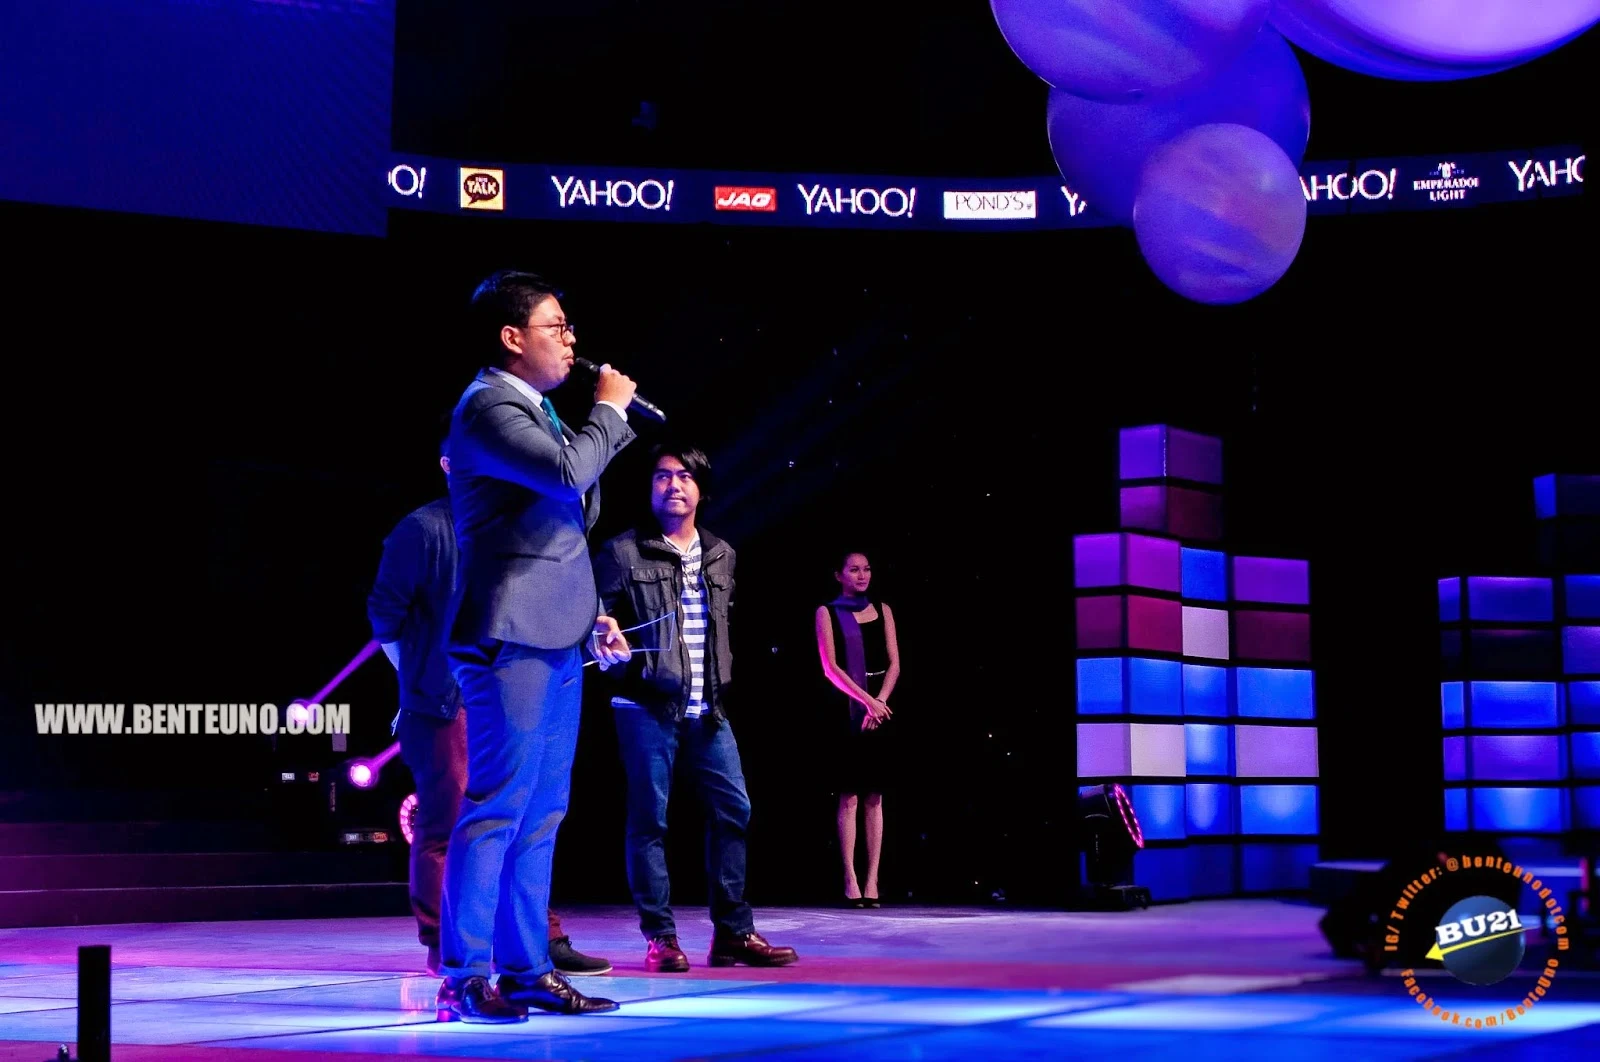 Yolanda Moon is Emerging Band of the Year at Yahoo Celebrity Awards 2014